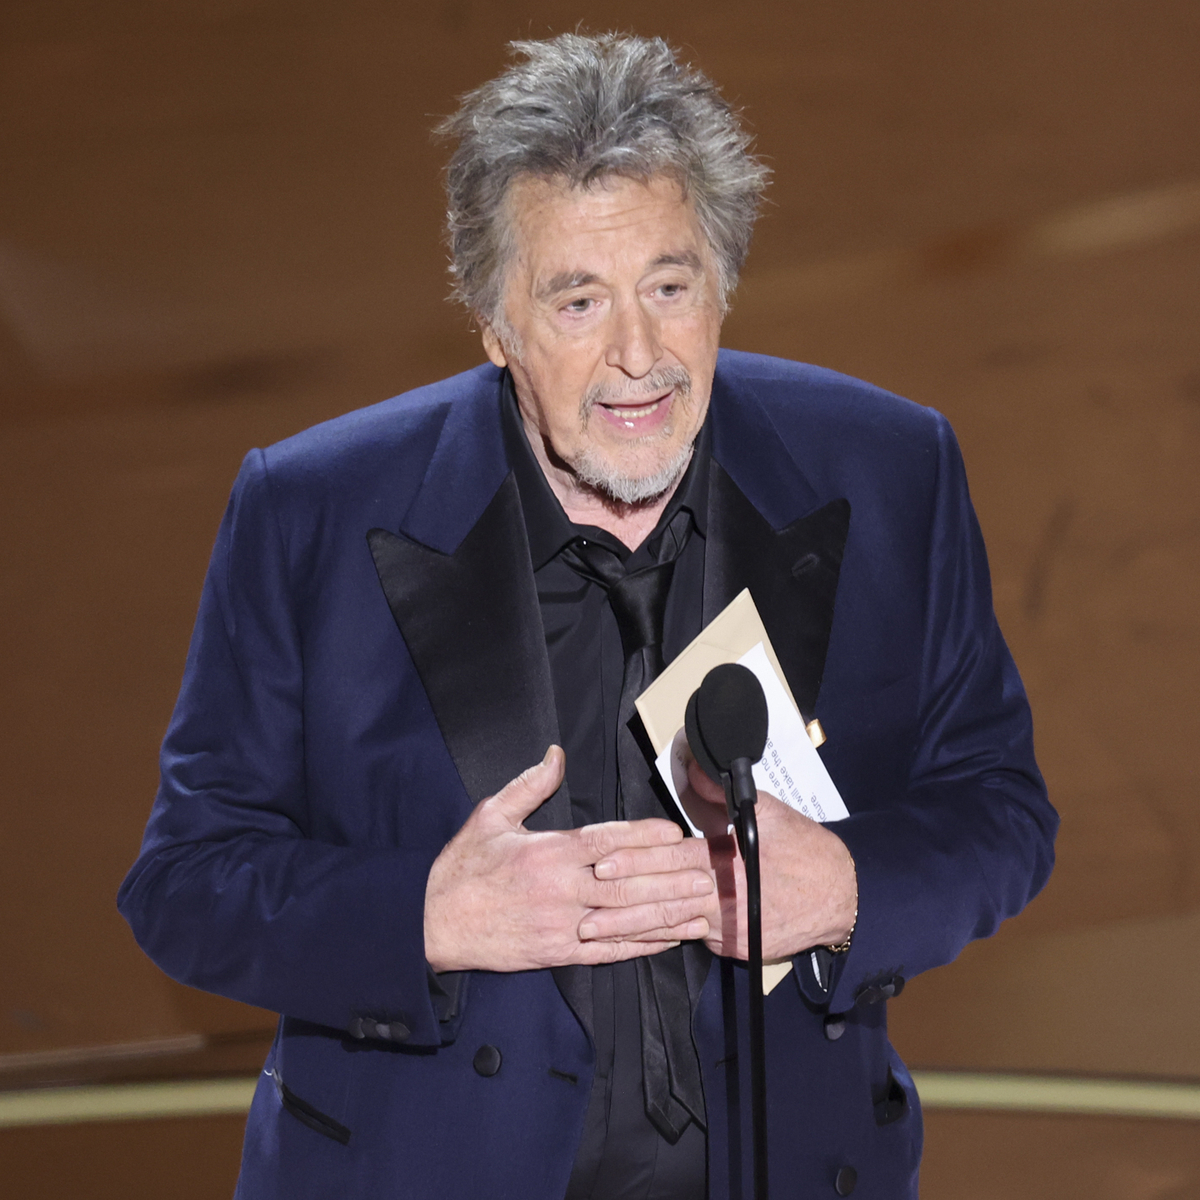 Al Pacino Addresses Controversial Oscars Moment